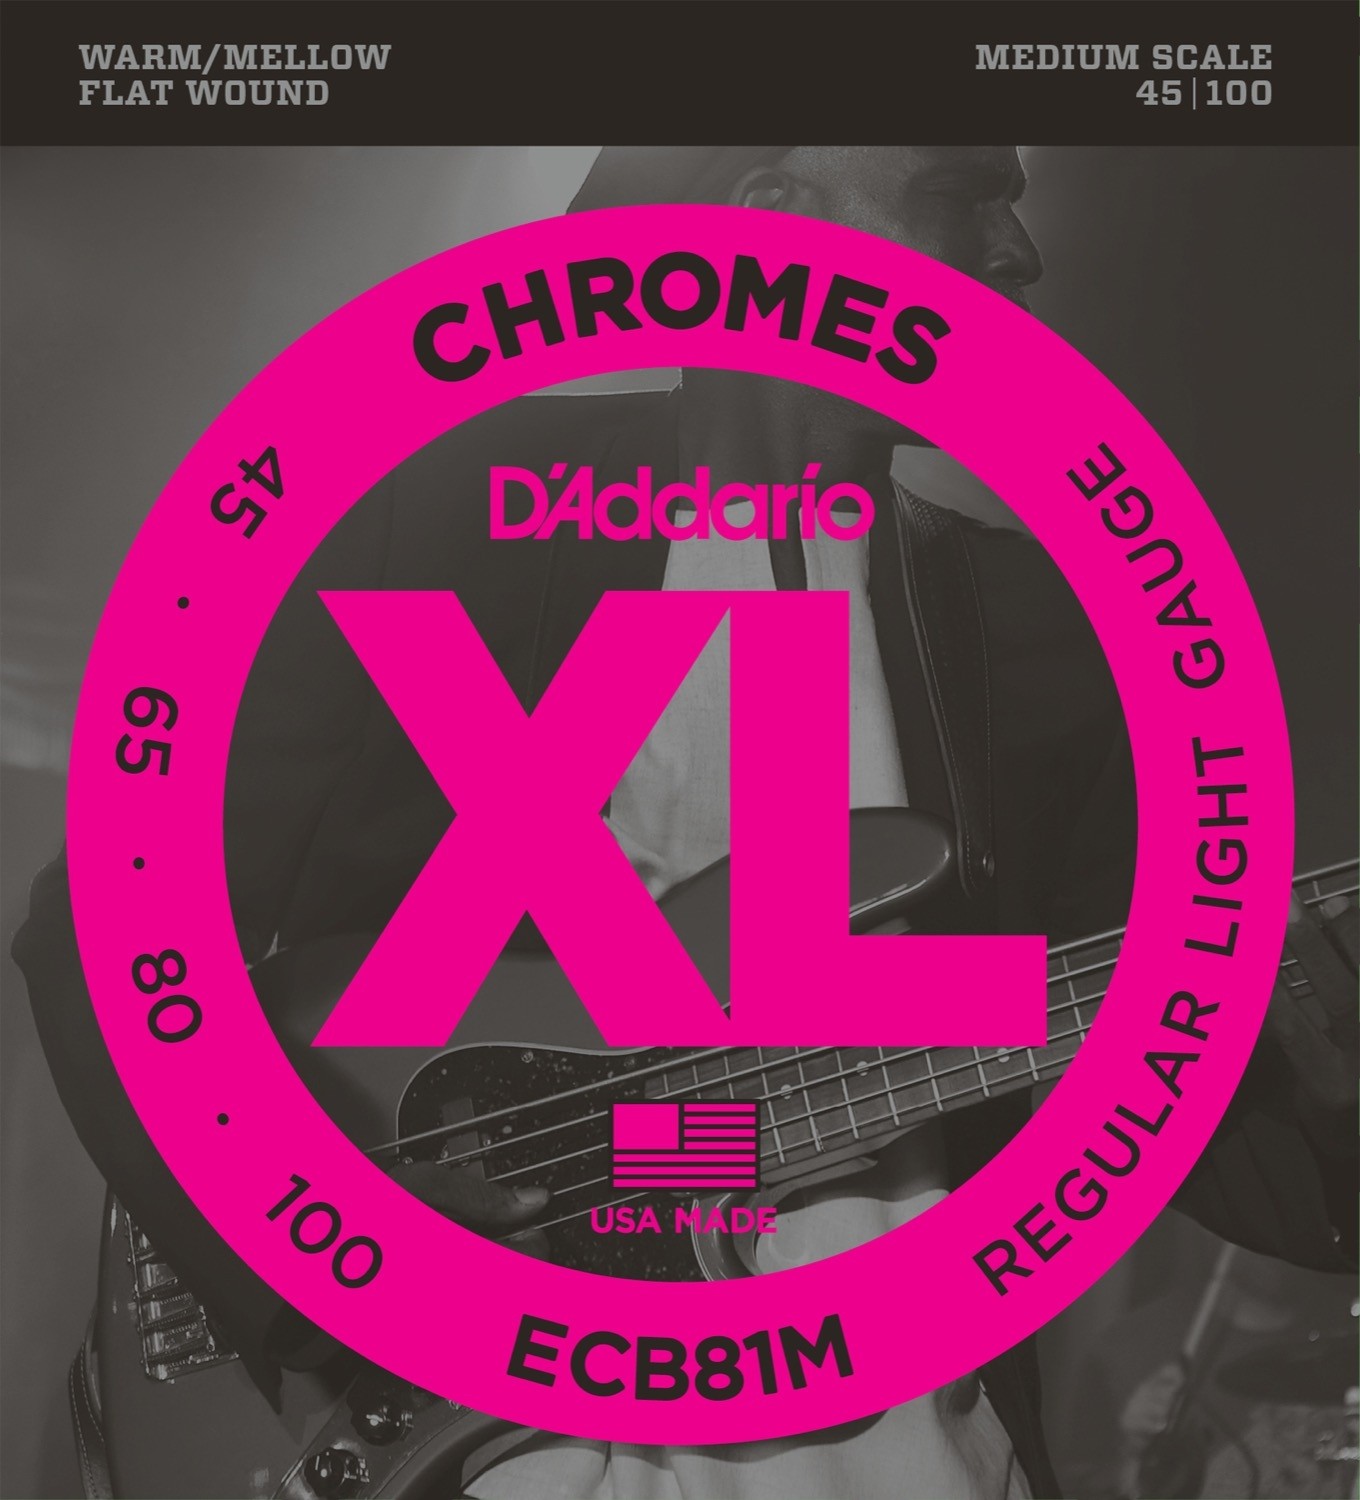 D'Addario ECB81M Chromes Bass, Light, 45-100, Medium Scale Flatwound